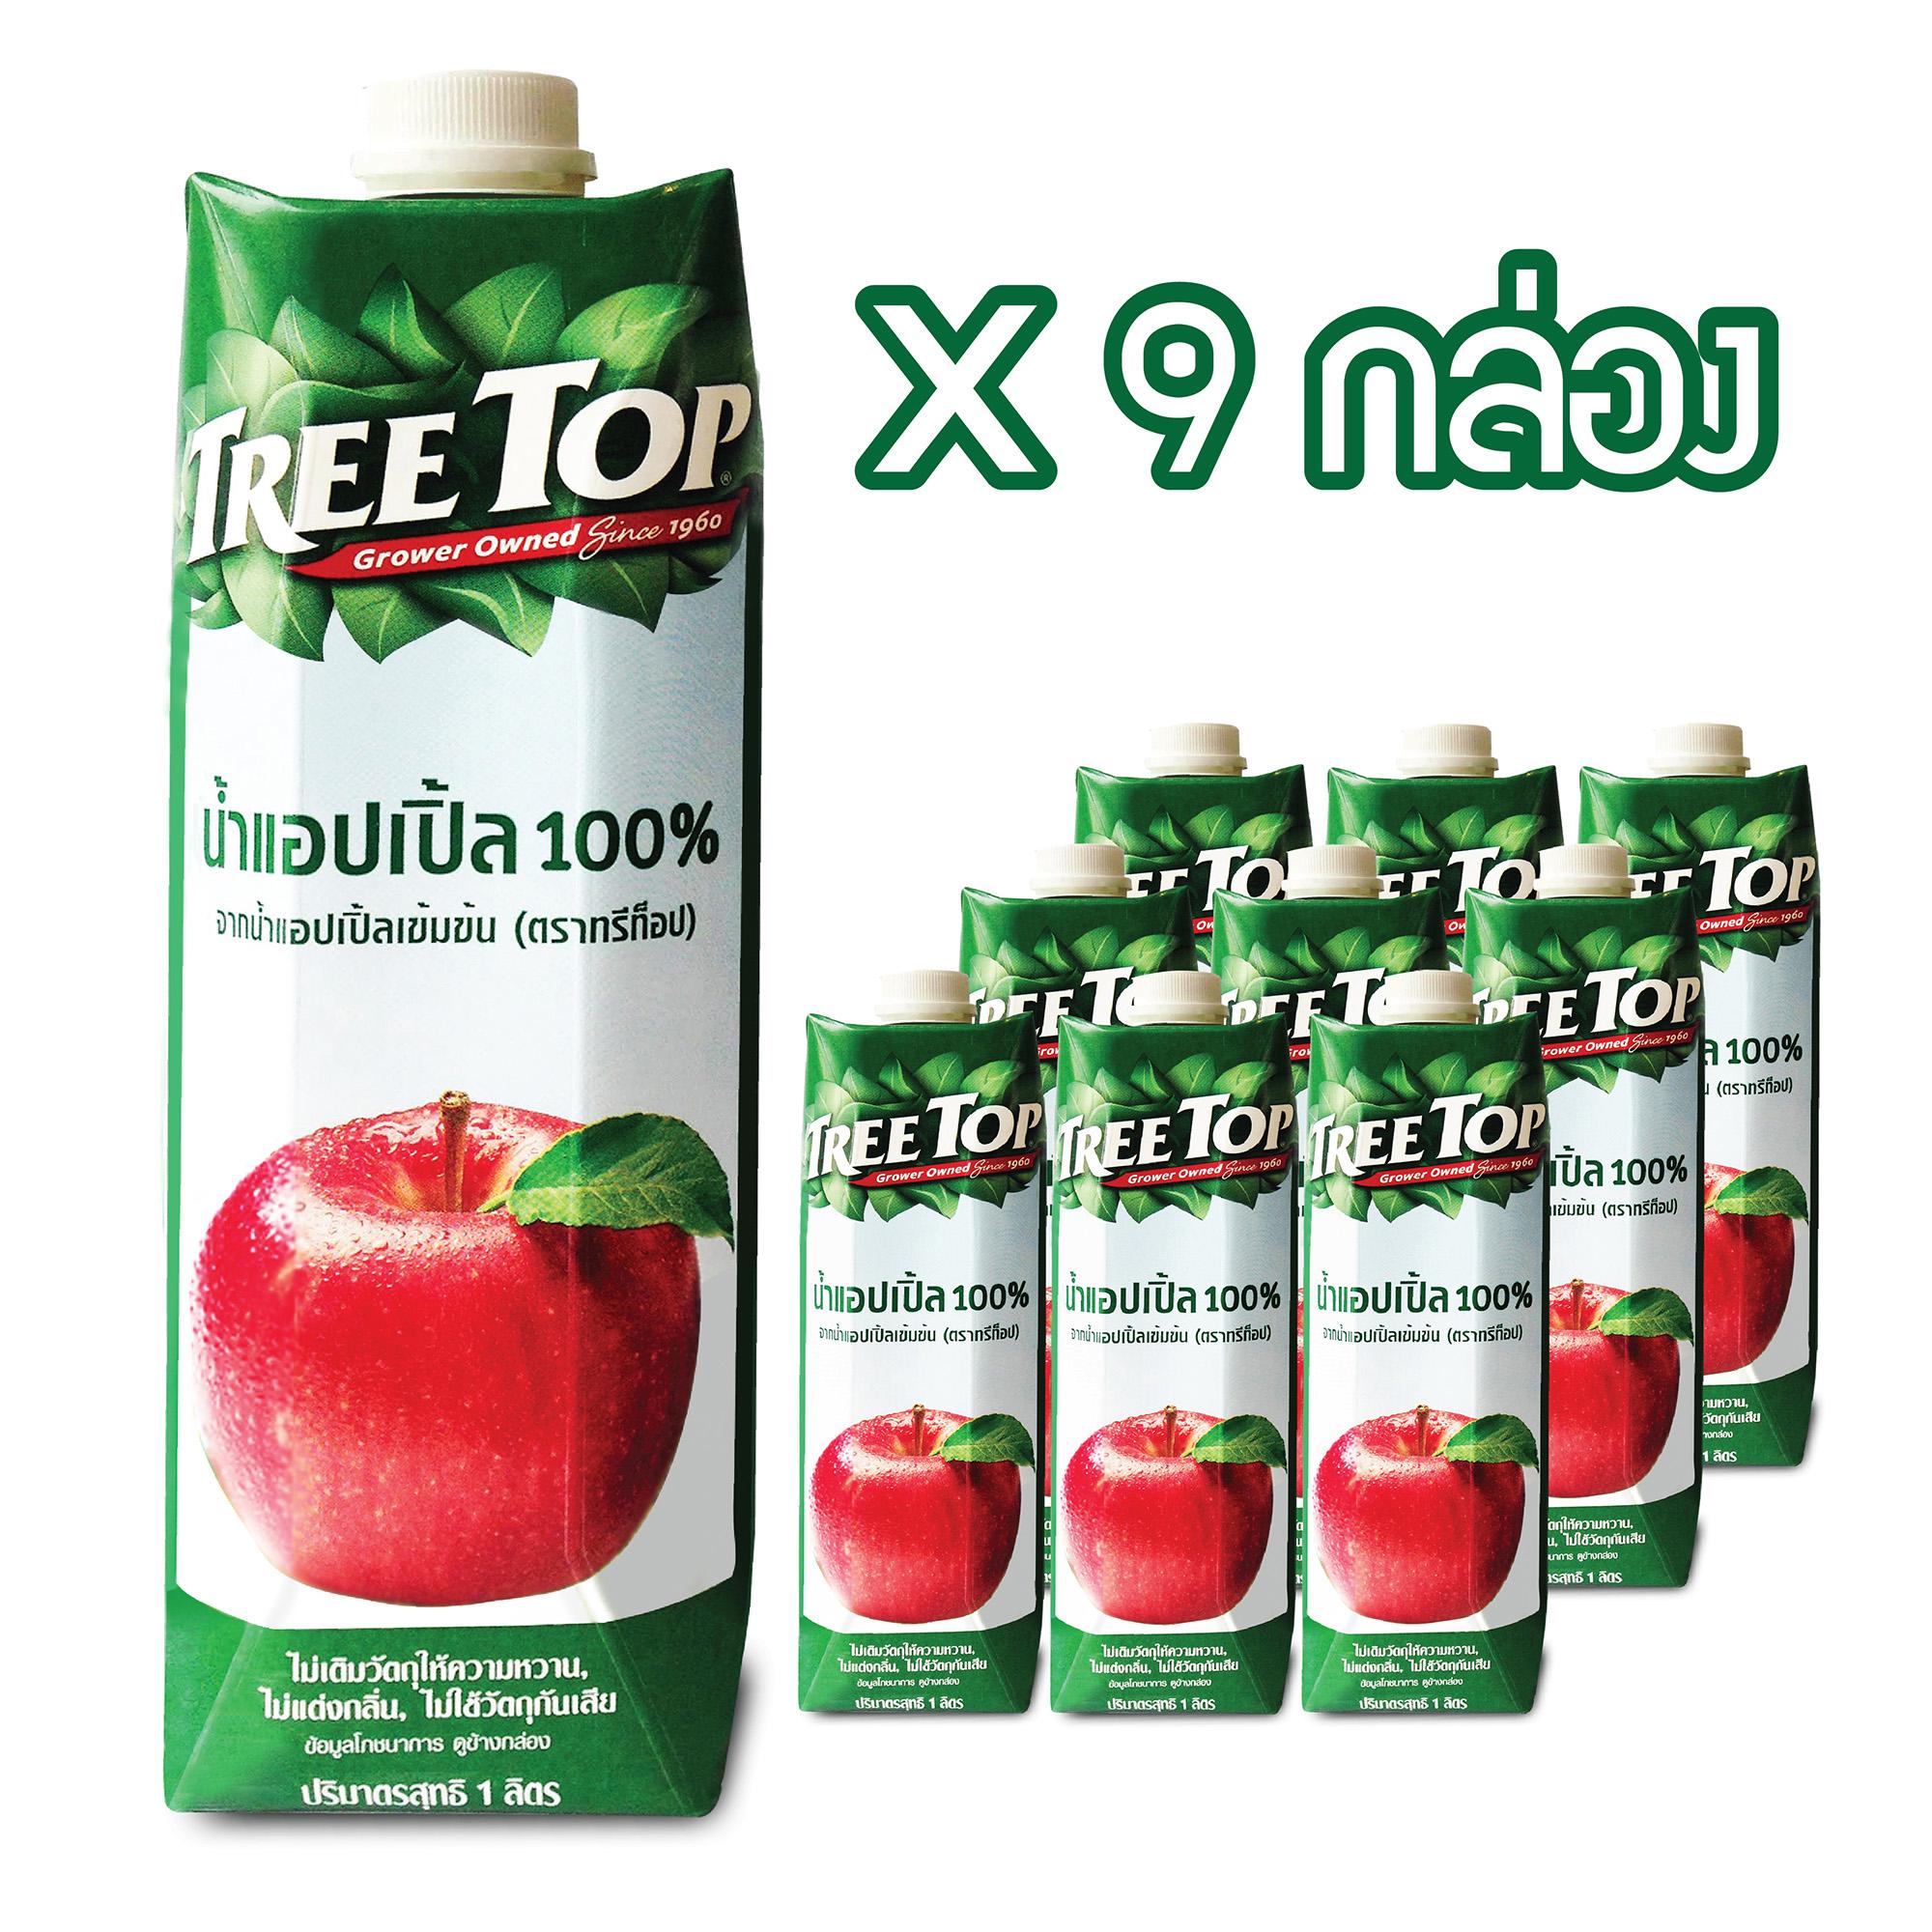 TREE TOP 100% Apple Juice 1000 ml. น้ำแอปเปิ้ล ทรีท็อป 100% 1000 มล. (แพ็ค 9 กล่อง) (9 bottles pack)